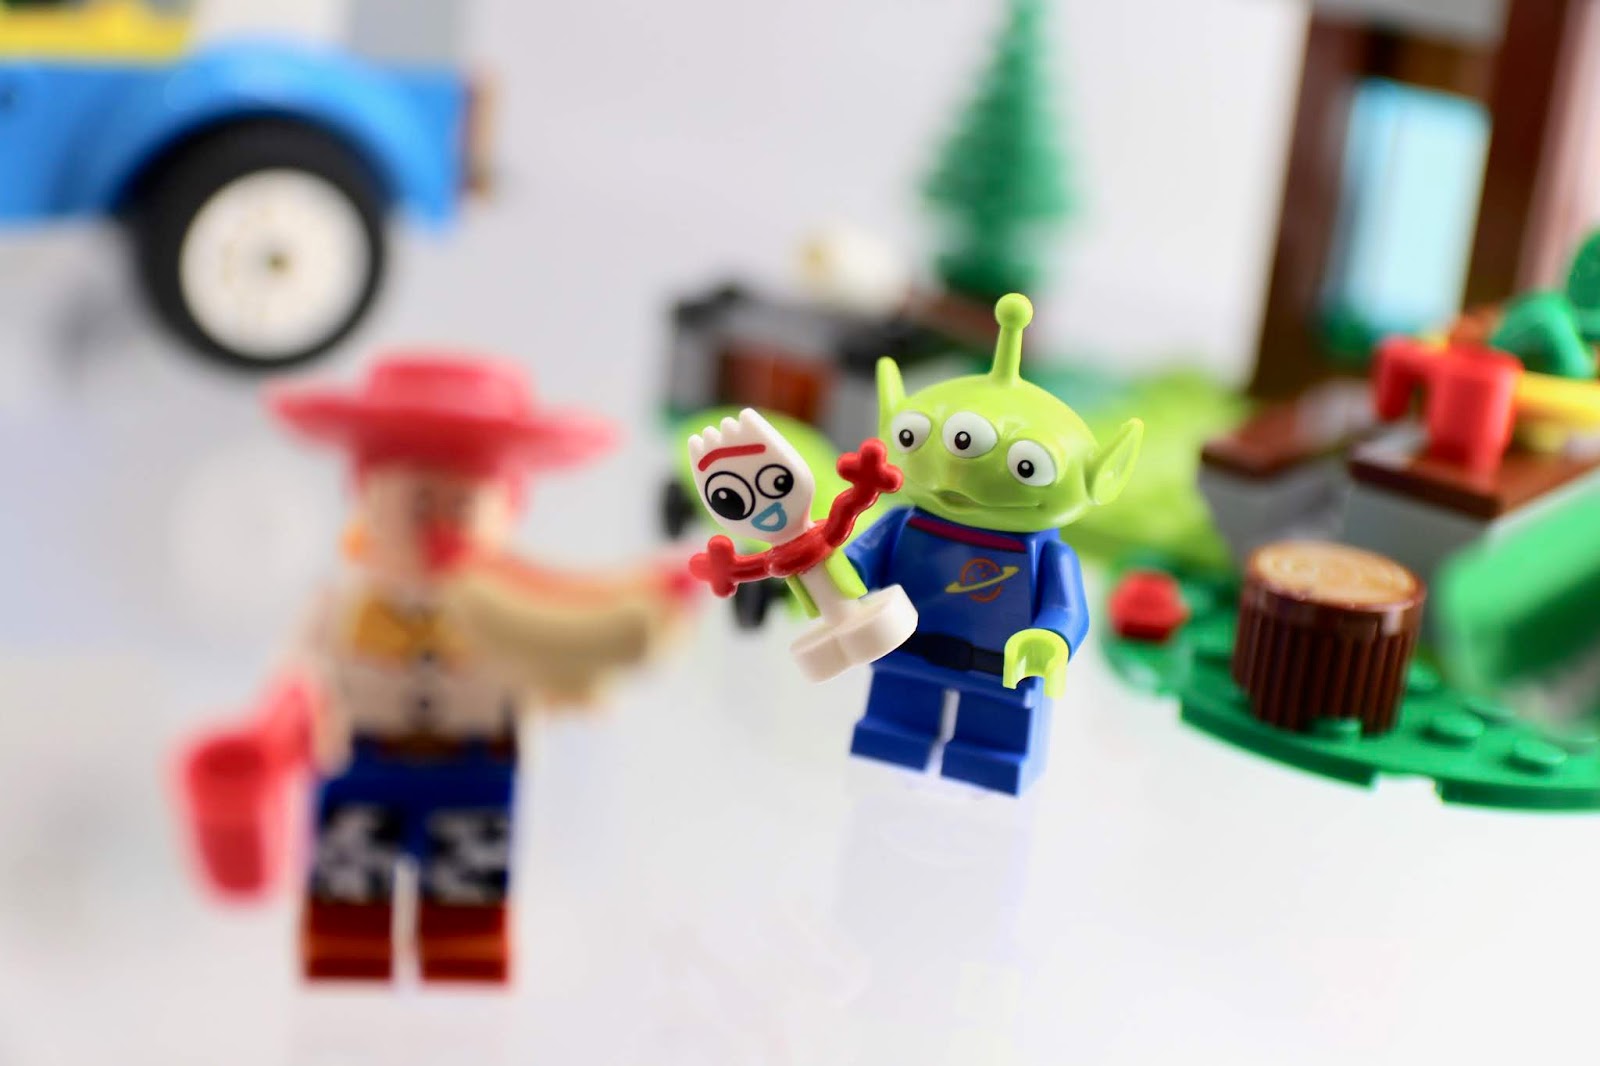 lego toy story 4 toy fair 2019